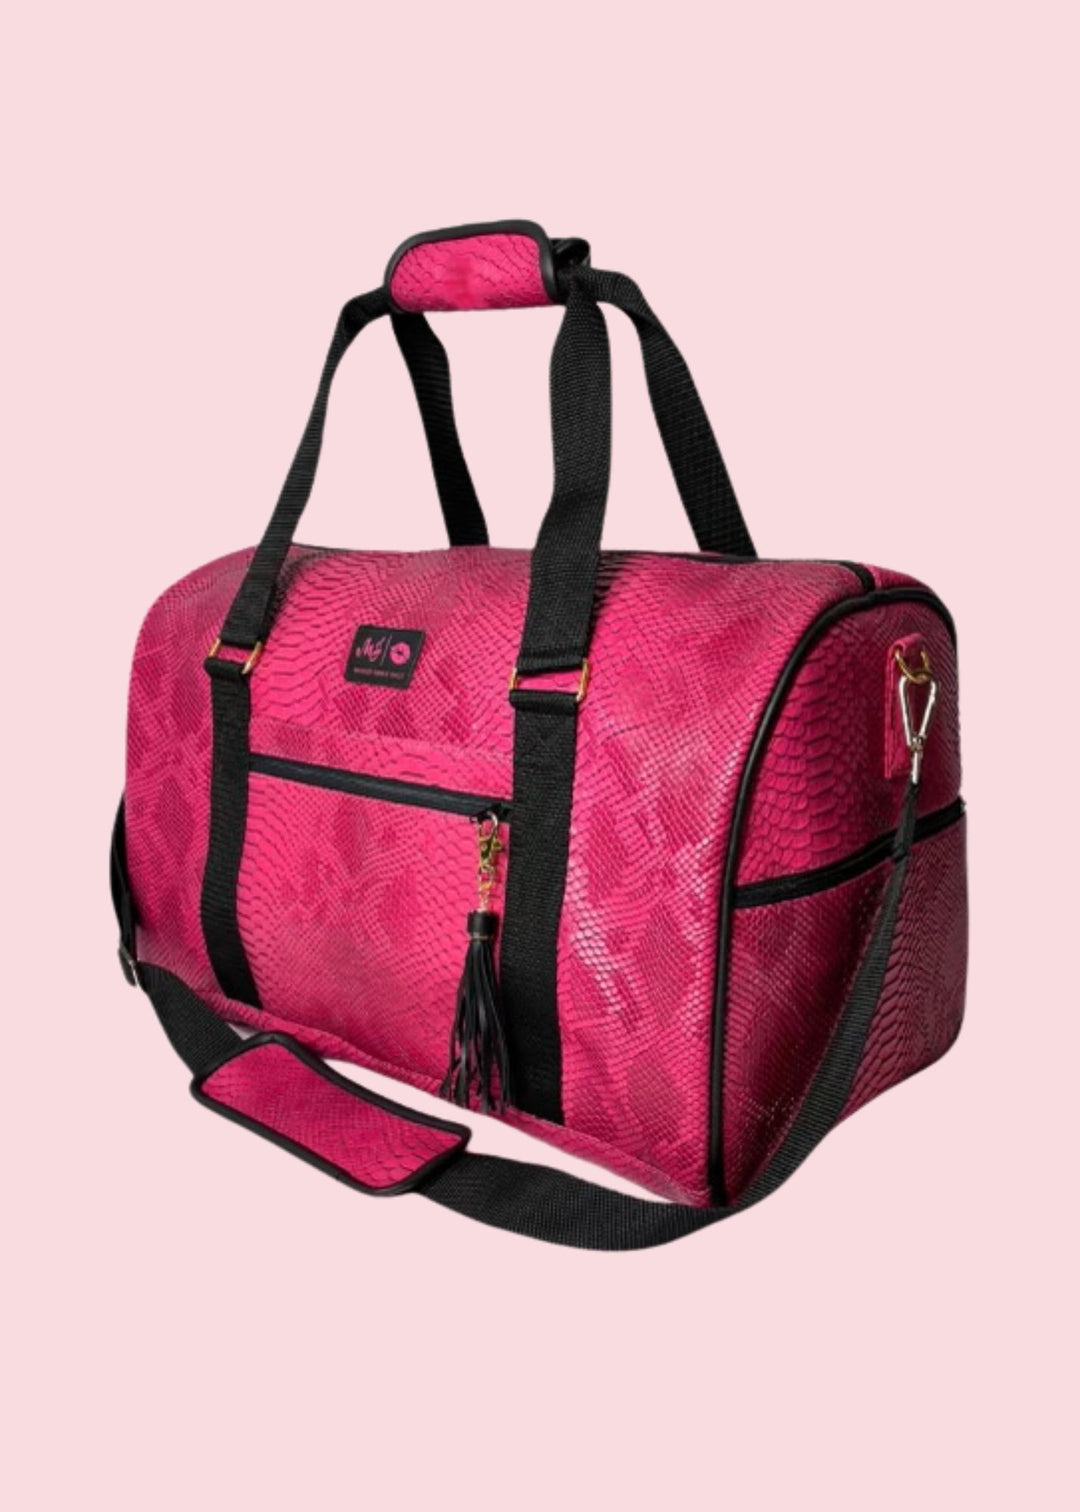 Makeup Junkie Bags - Pink Python Duffle [Pre-Order]